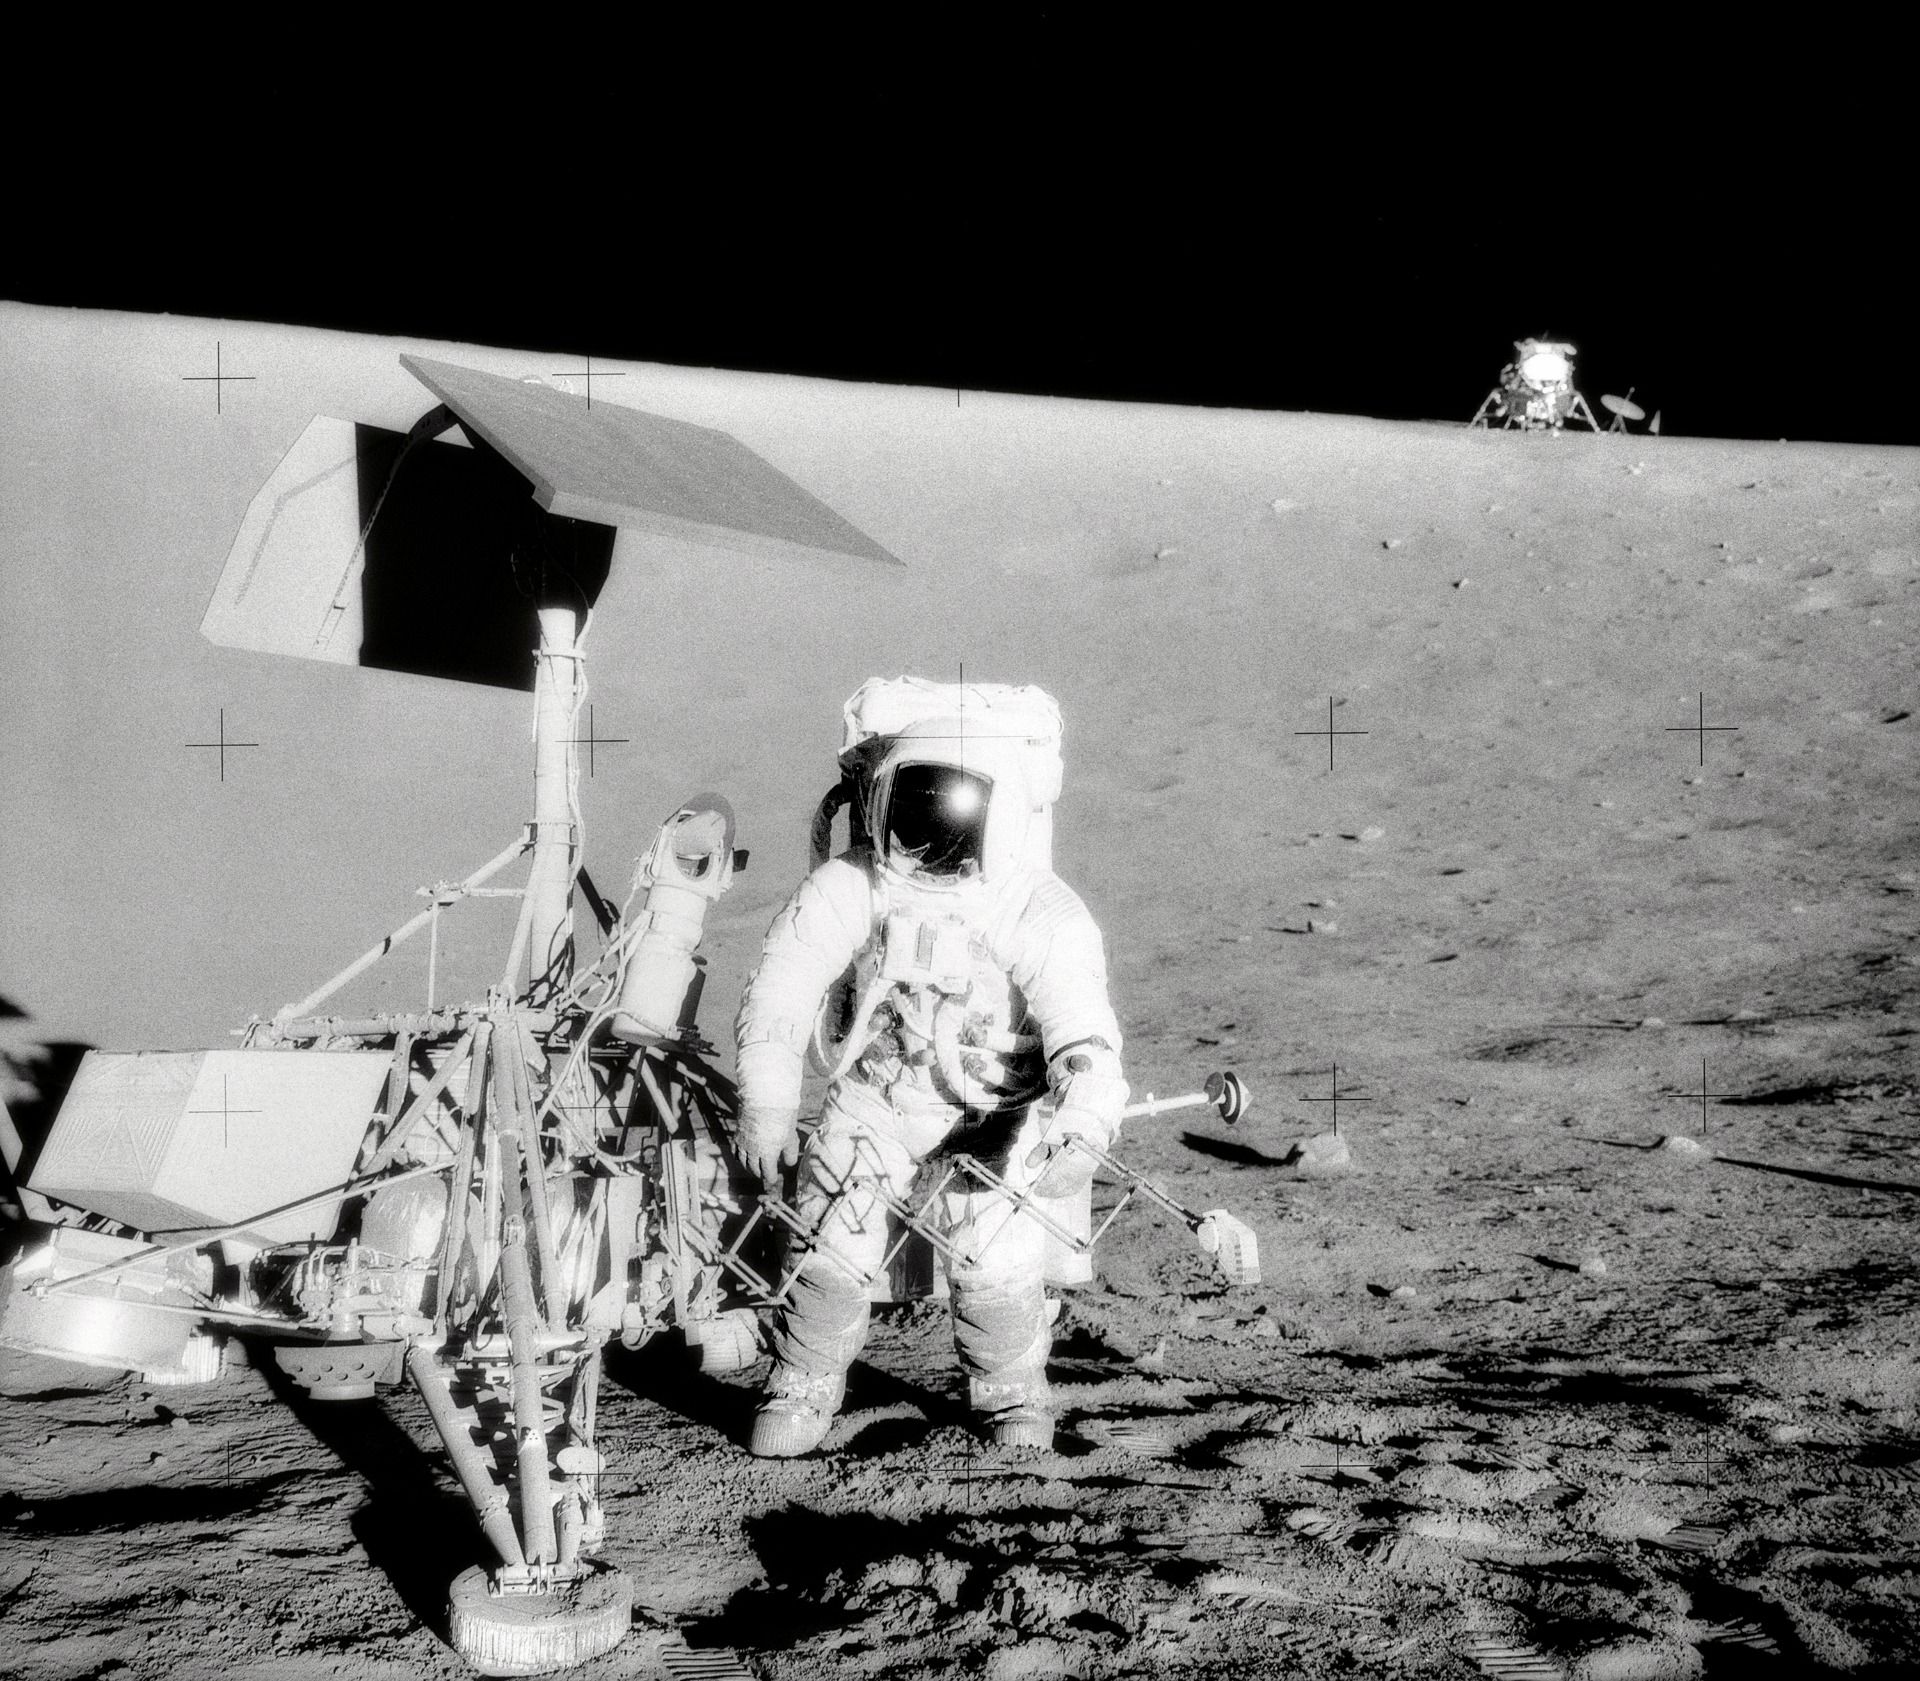 Astronaut Conrad with Surveyor III on Moon surface